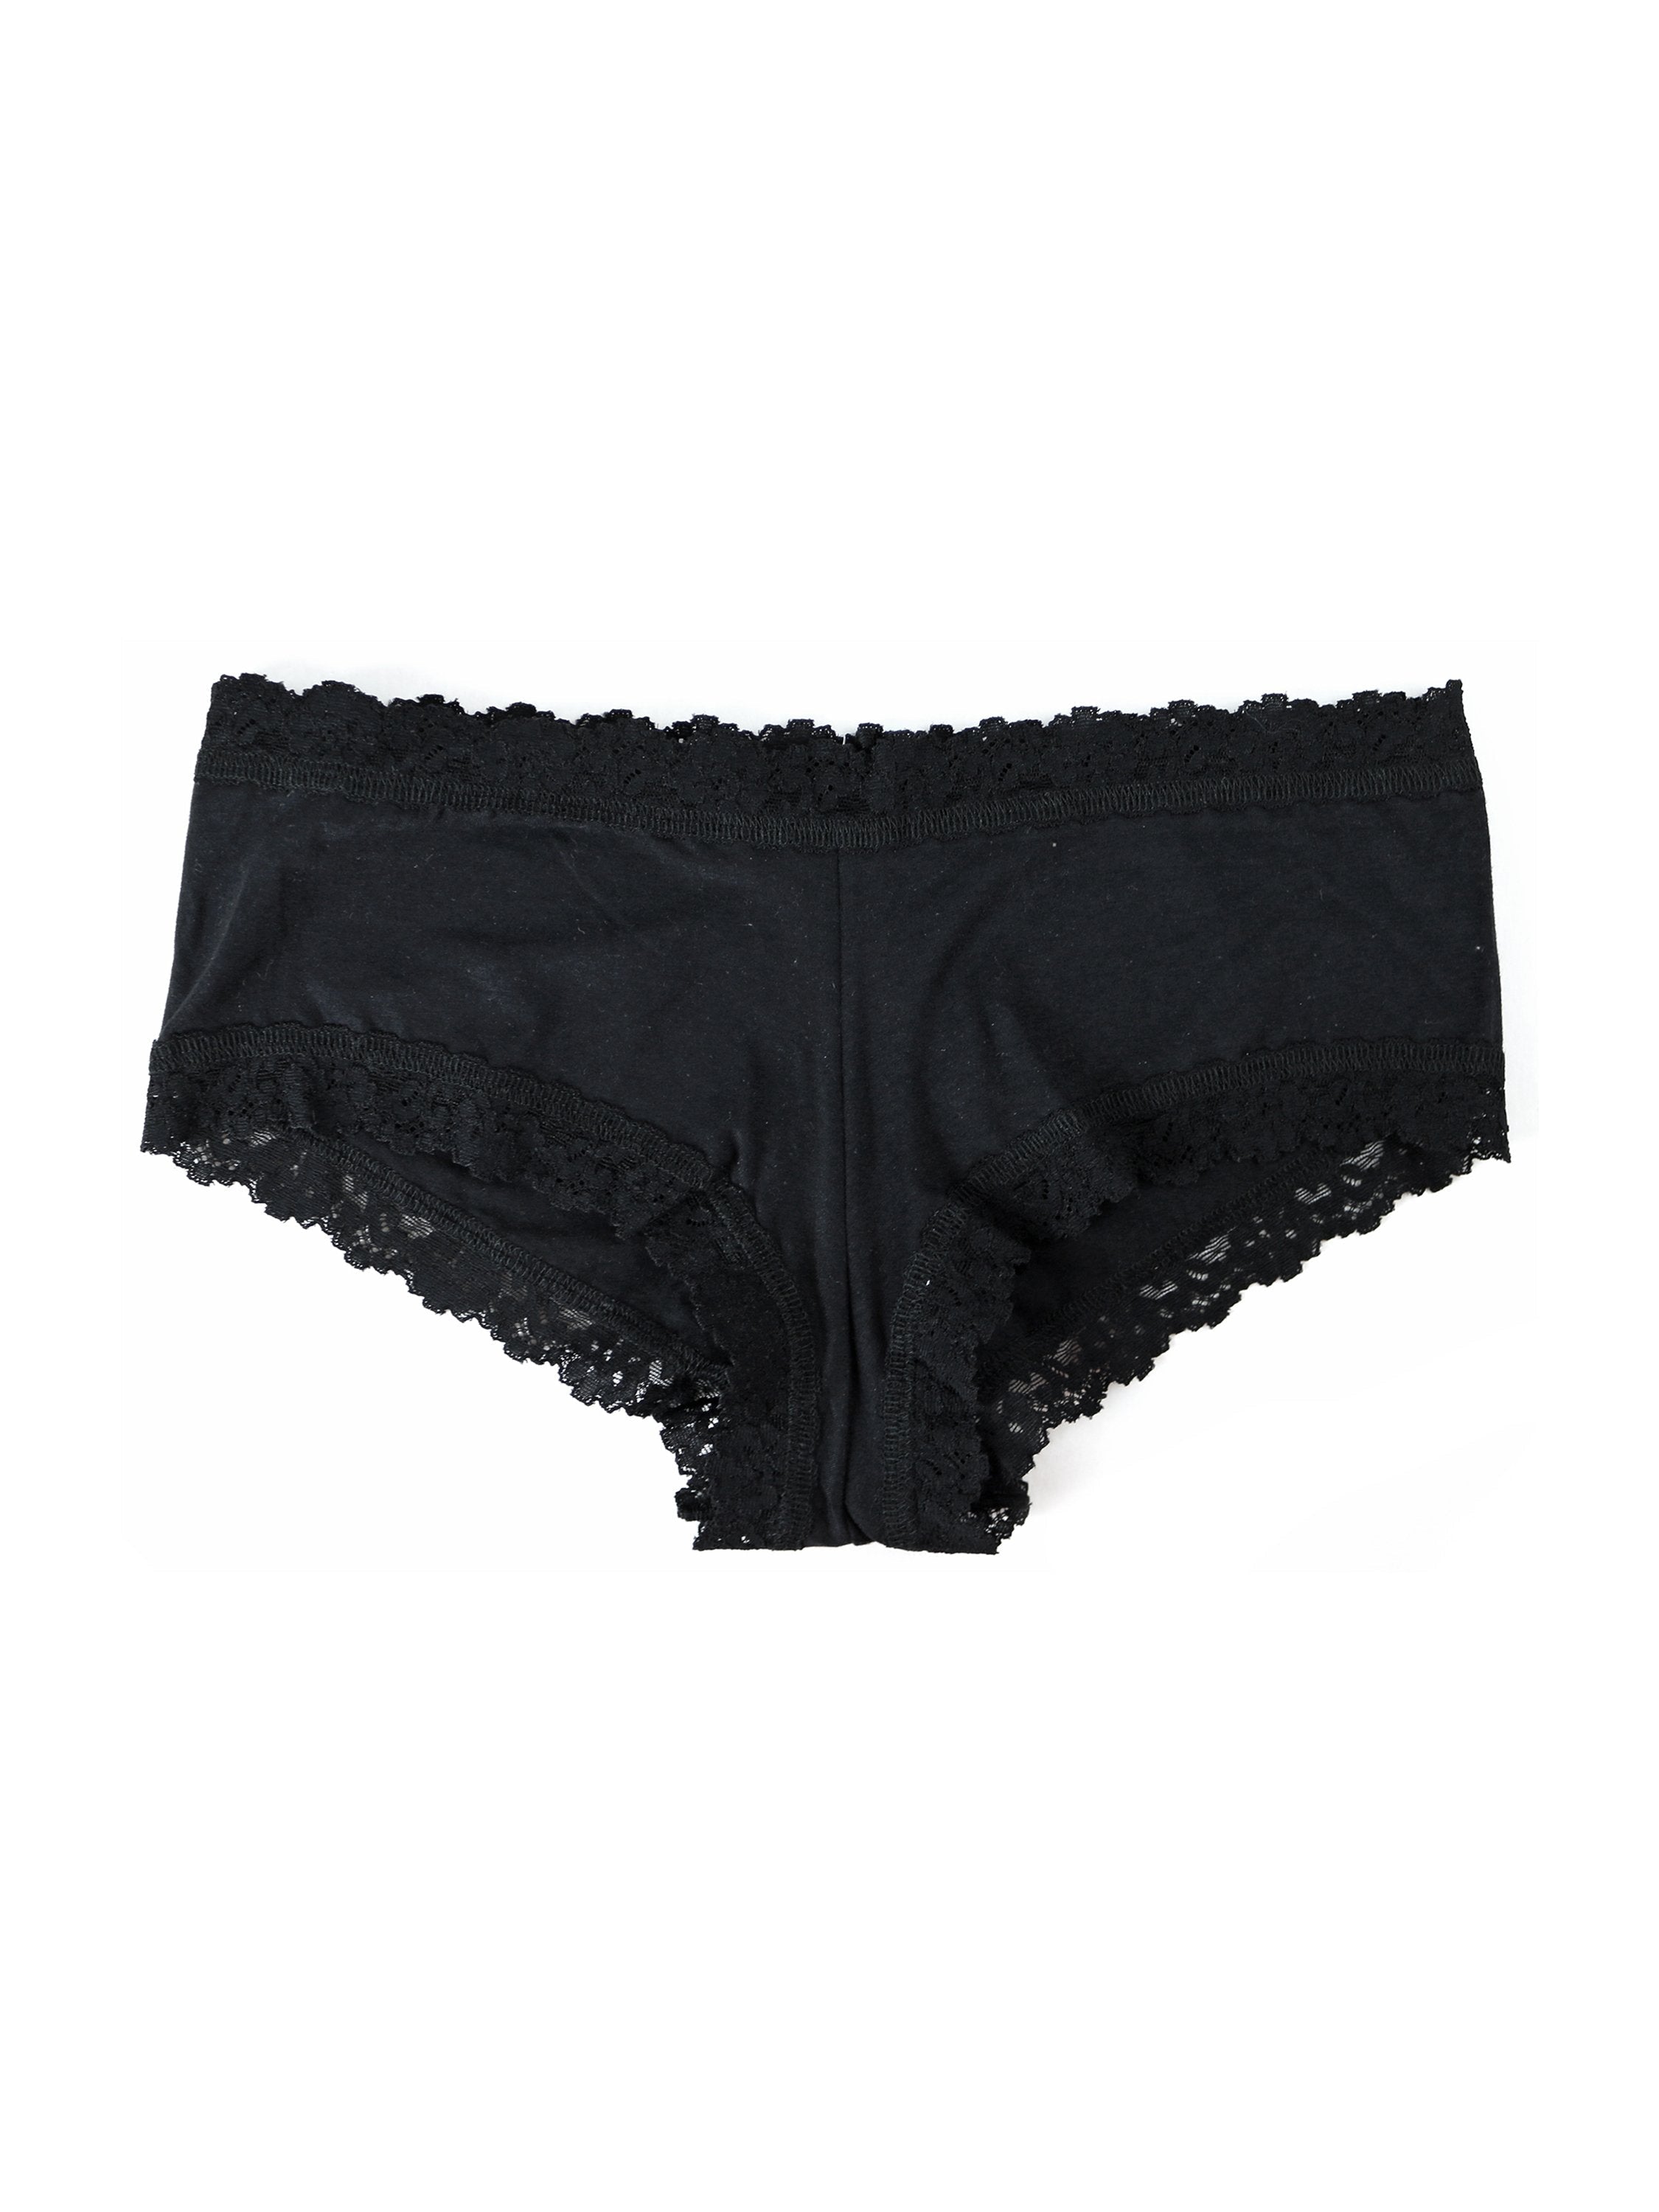 GETOUT Micro Thong Black Lace Underwear Boyshort Shorts Used Thong